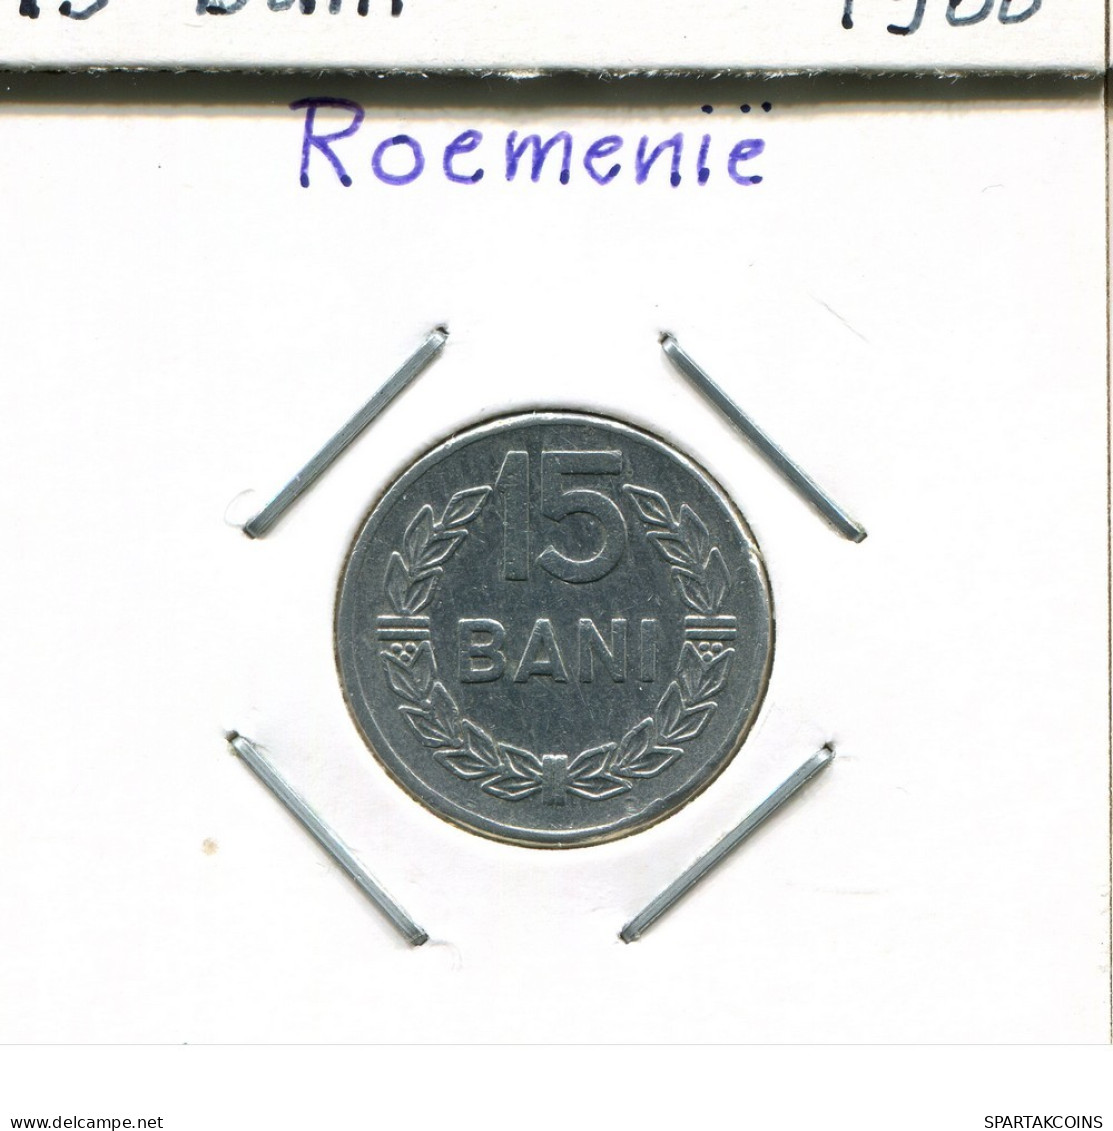 15 BANI 1975 ROMANIA Coin #AP650.2.U.A - Roemenië